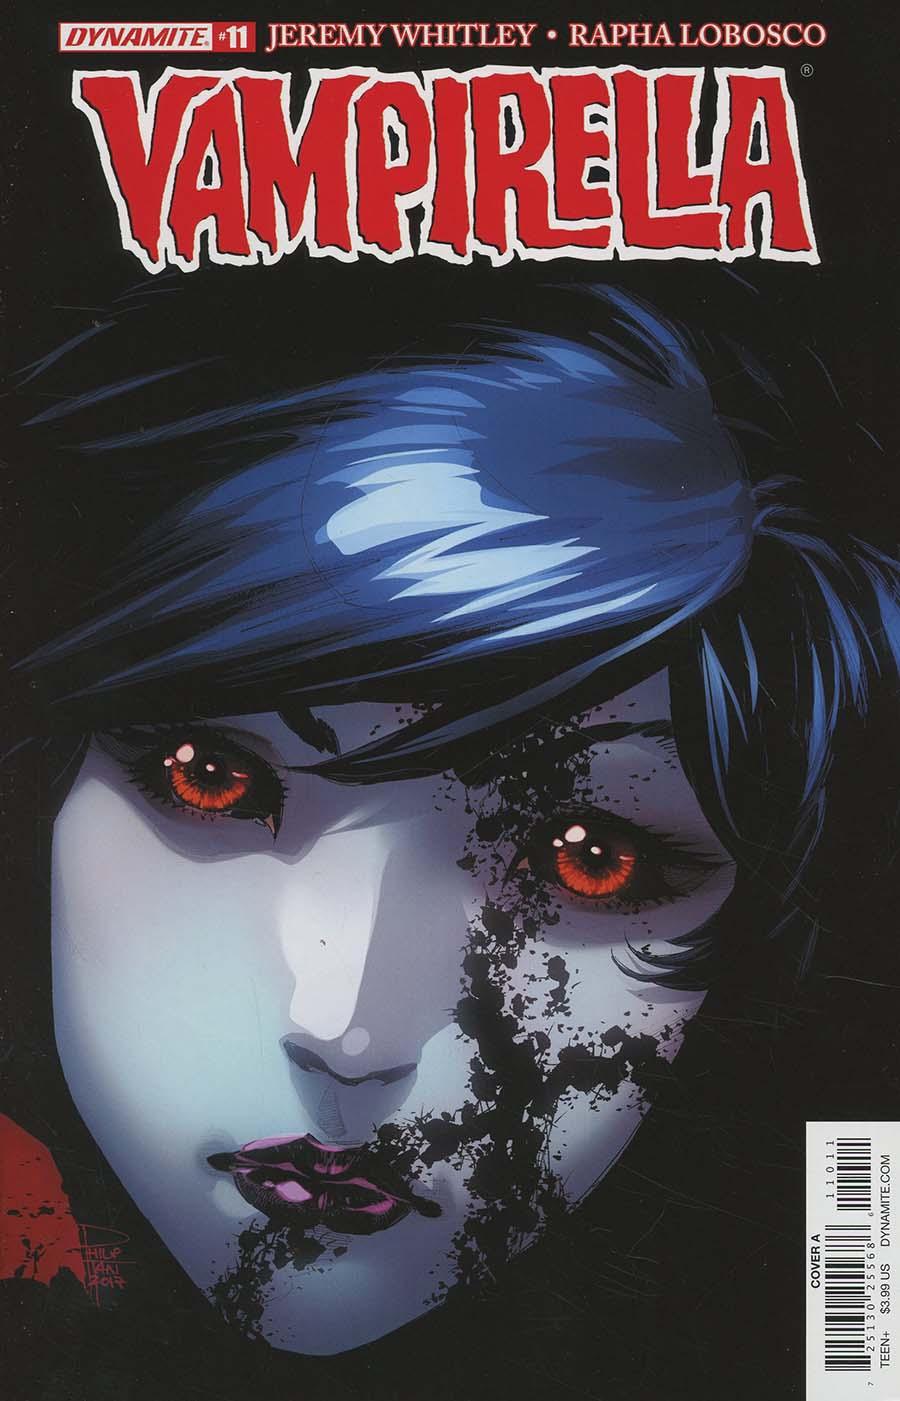 Vampirella Vol. 7 #11